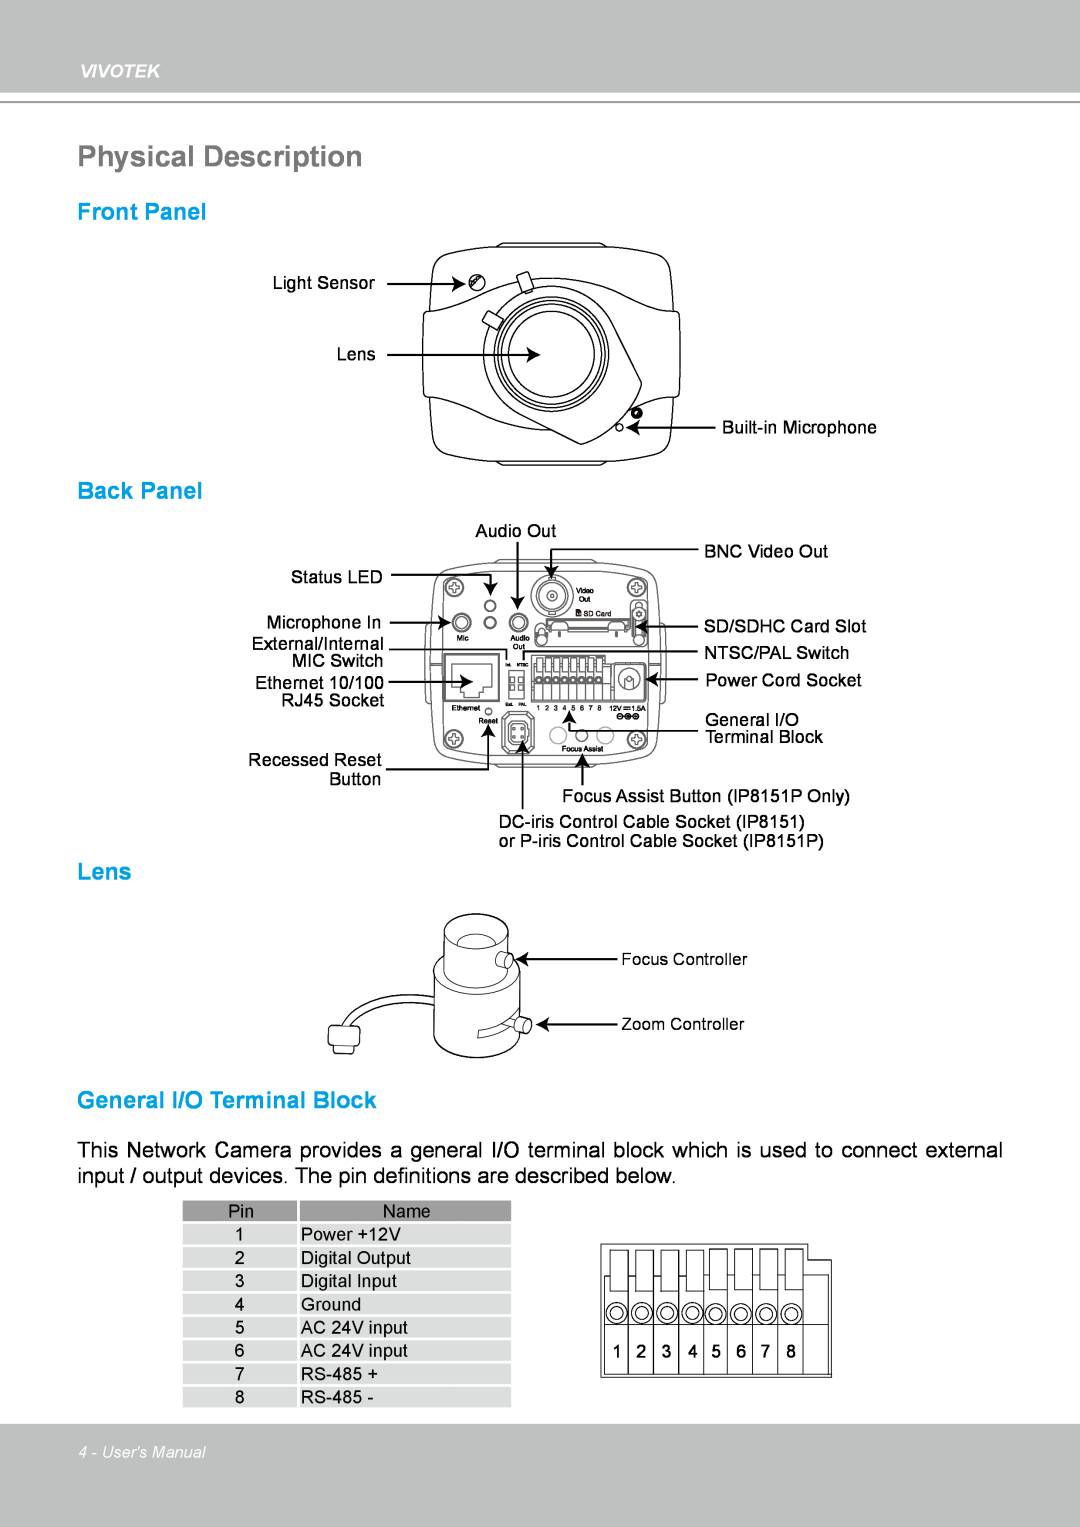 Vivotek IP8151 manual Physical Description, Front Panel, Back Panel, Lens, General I/O Terminal Block, 4 5 6 7, Vivotek 